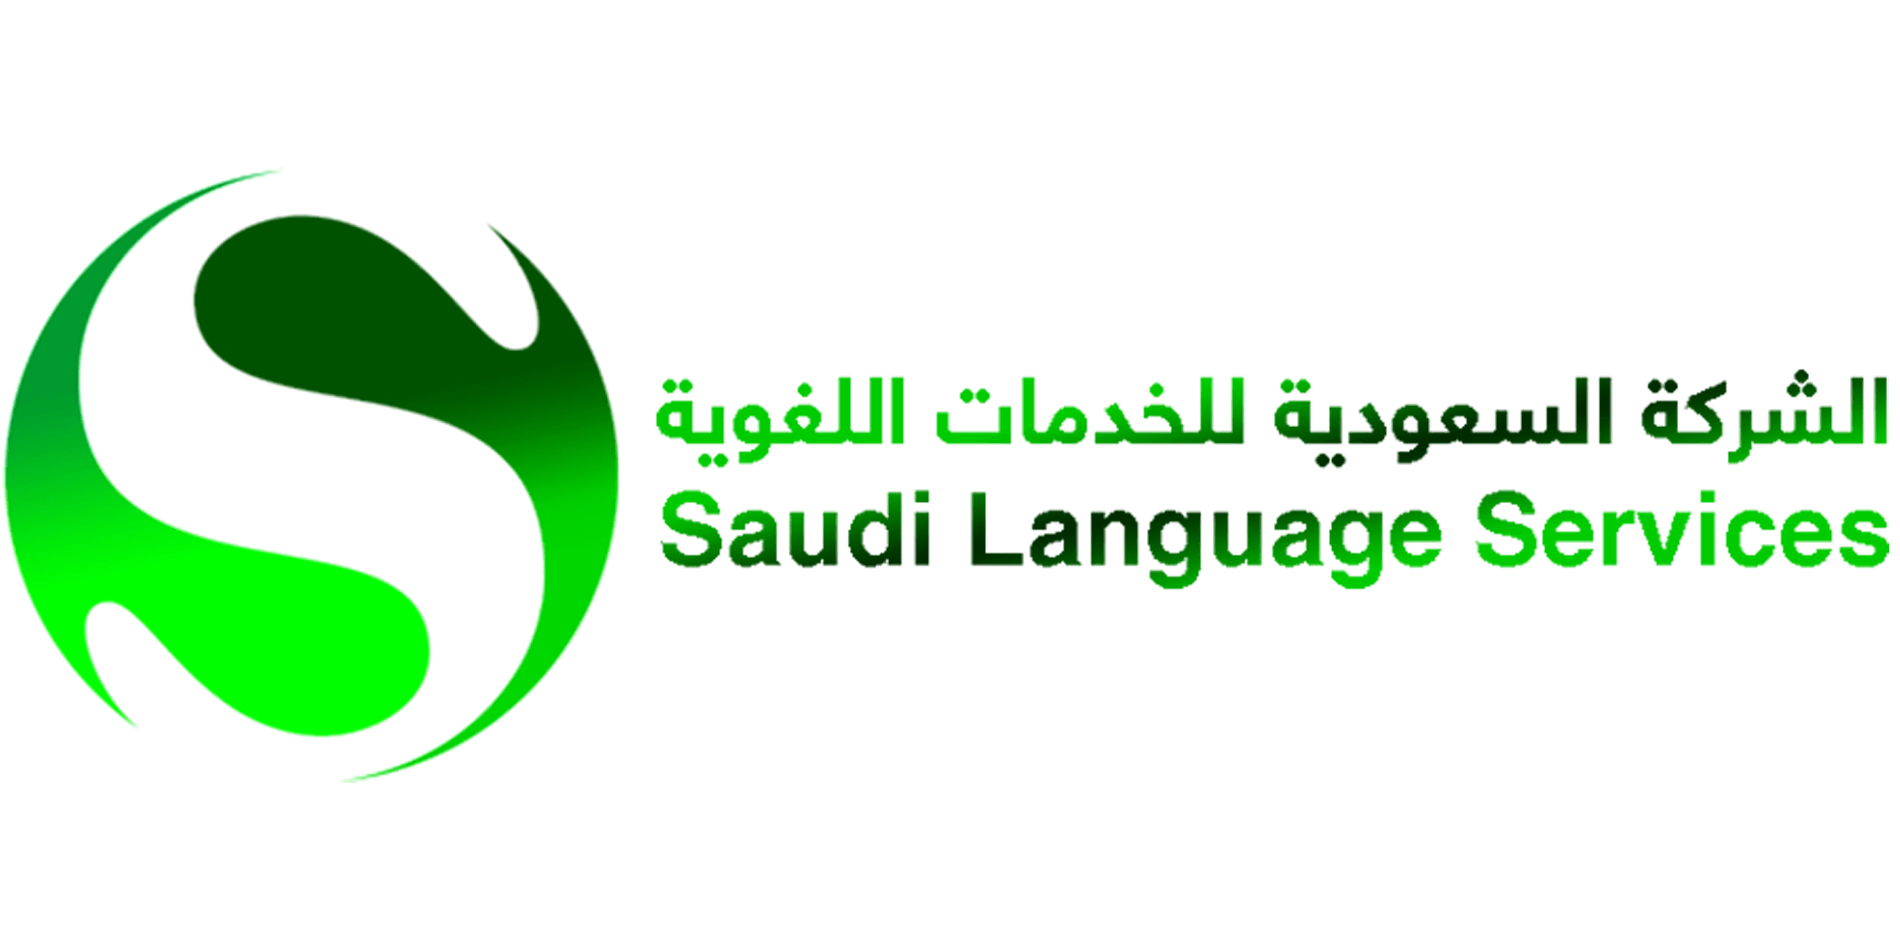 Saudi Language Services